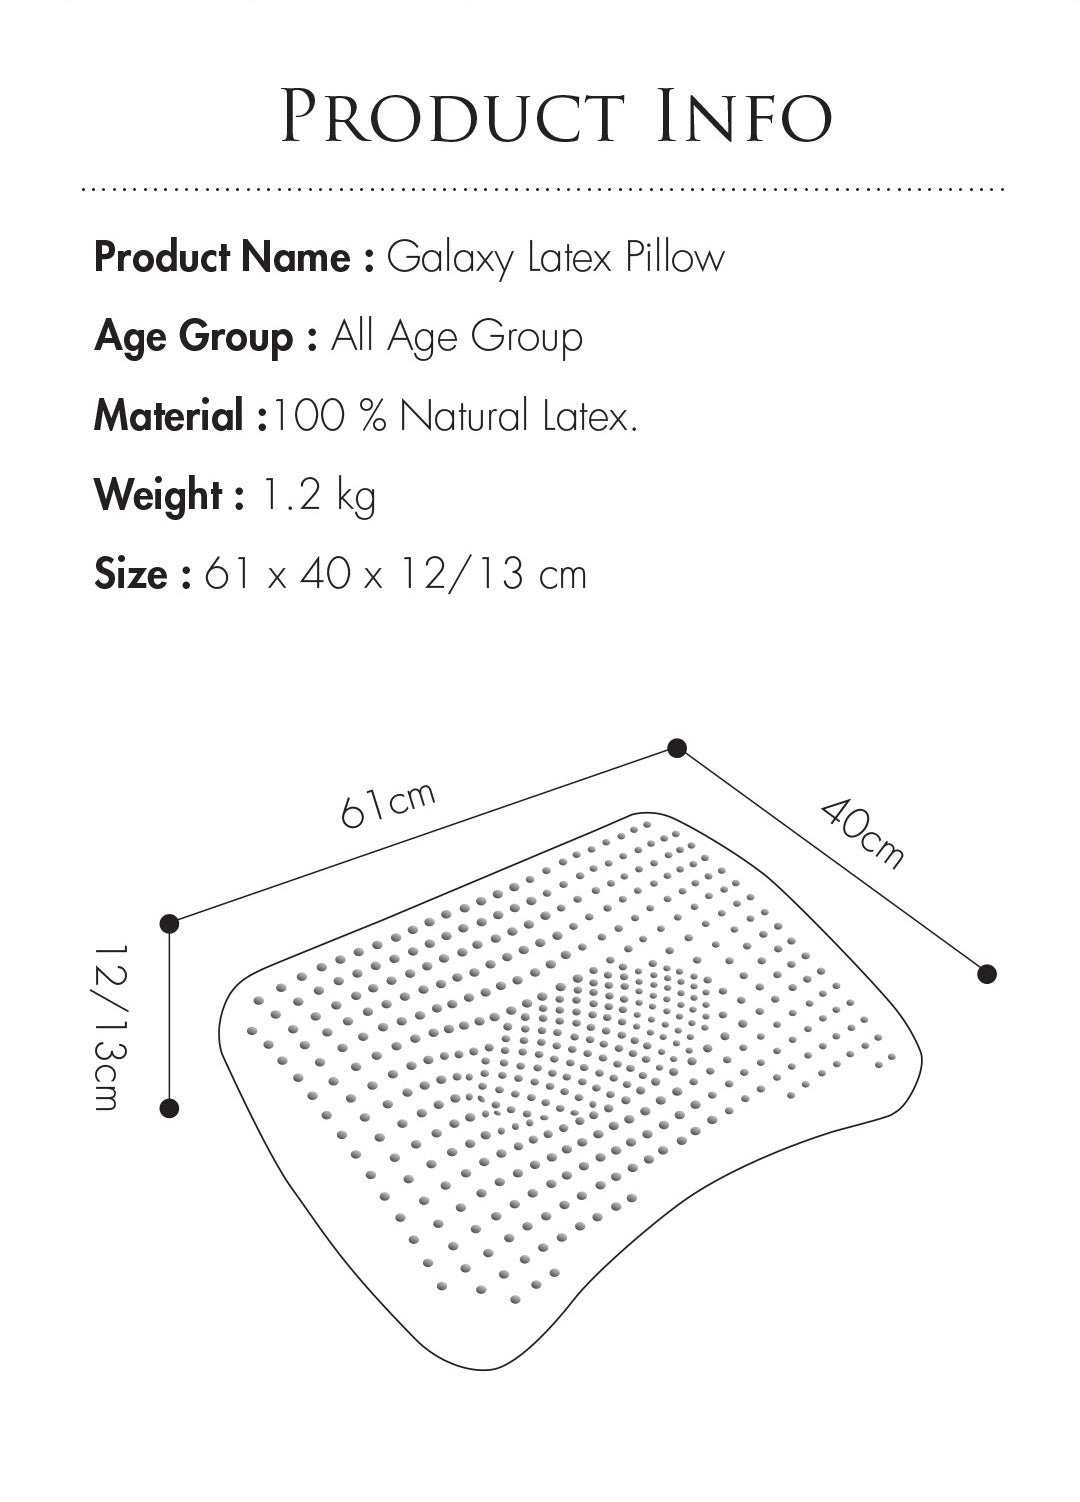 galaxy-latex-pillow-product-description